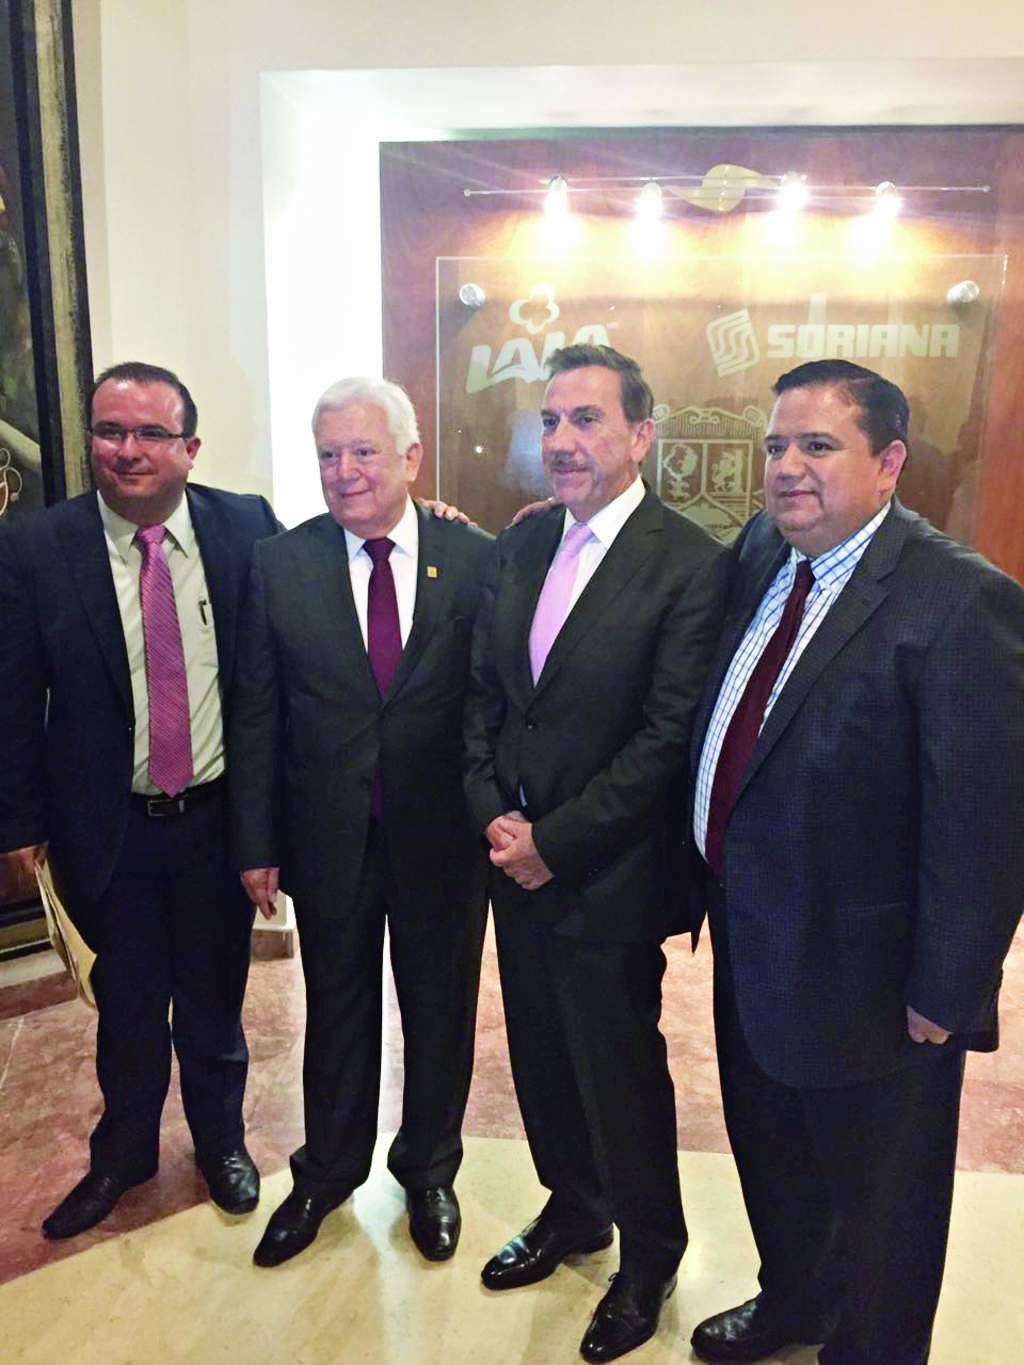 Jesús A. Mendoza Aguirre, Jesús G. Sotomayor Garza, Javier
Laynez Potisek y Jesús G. Sotomayor Hernández.
